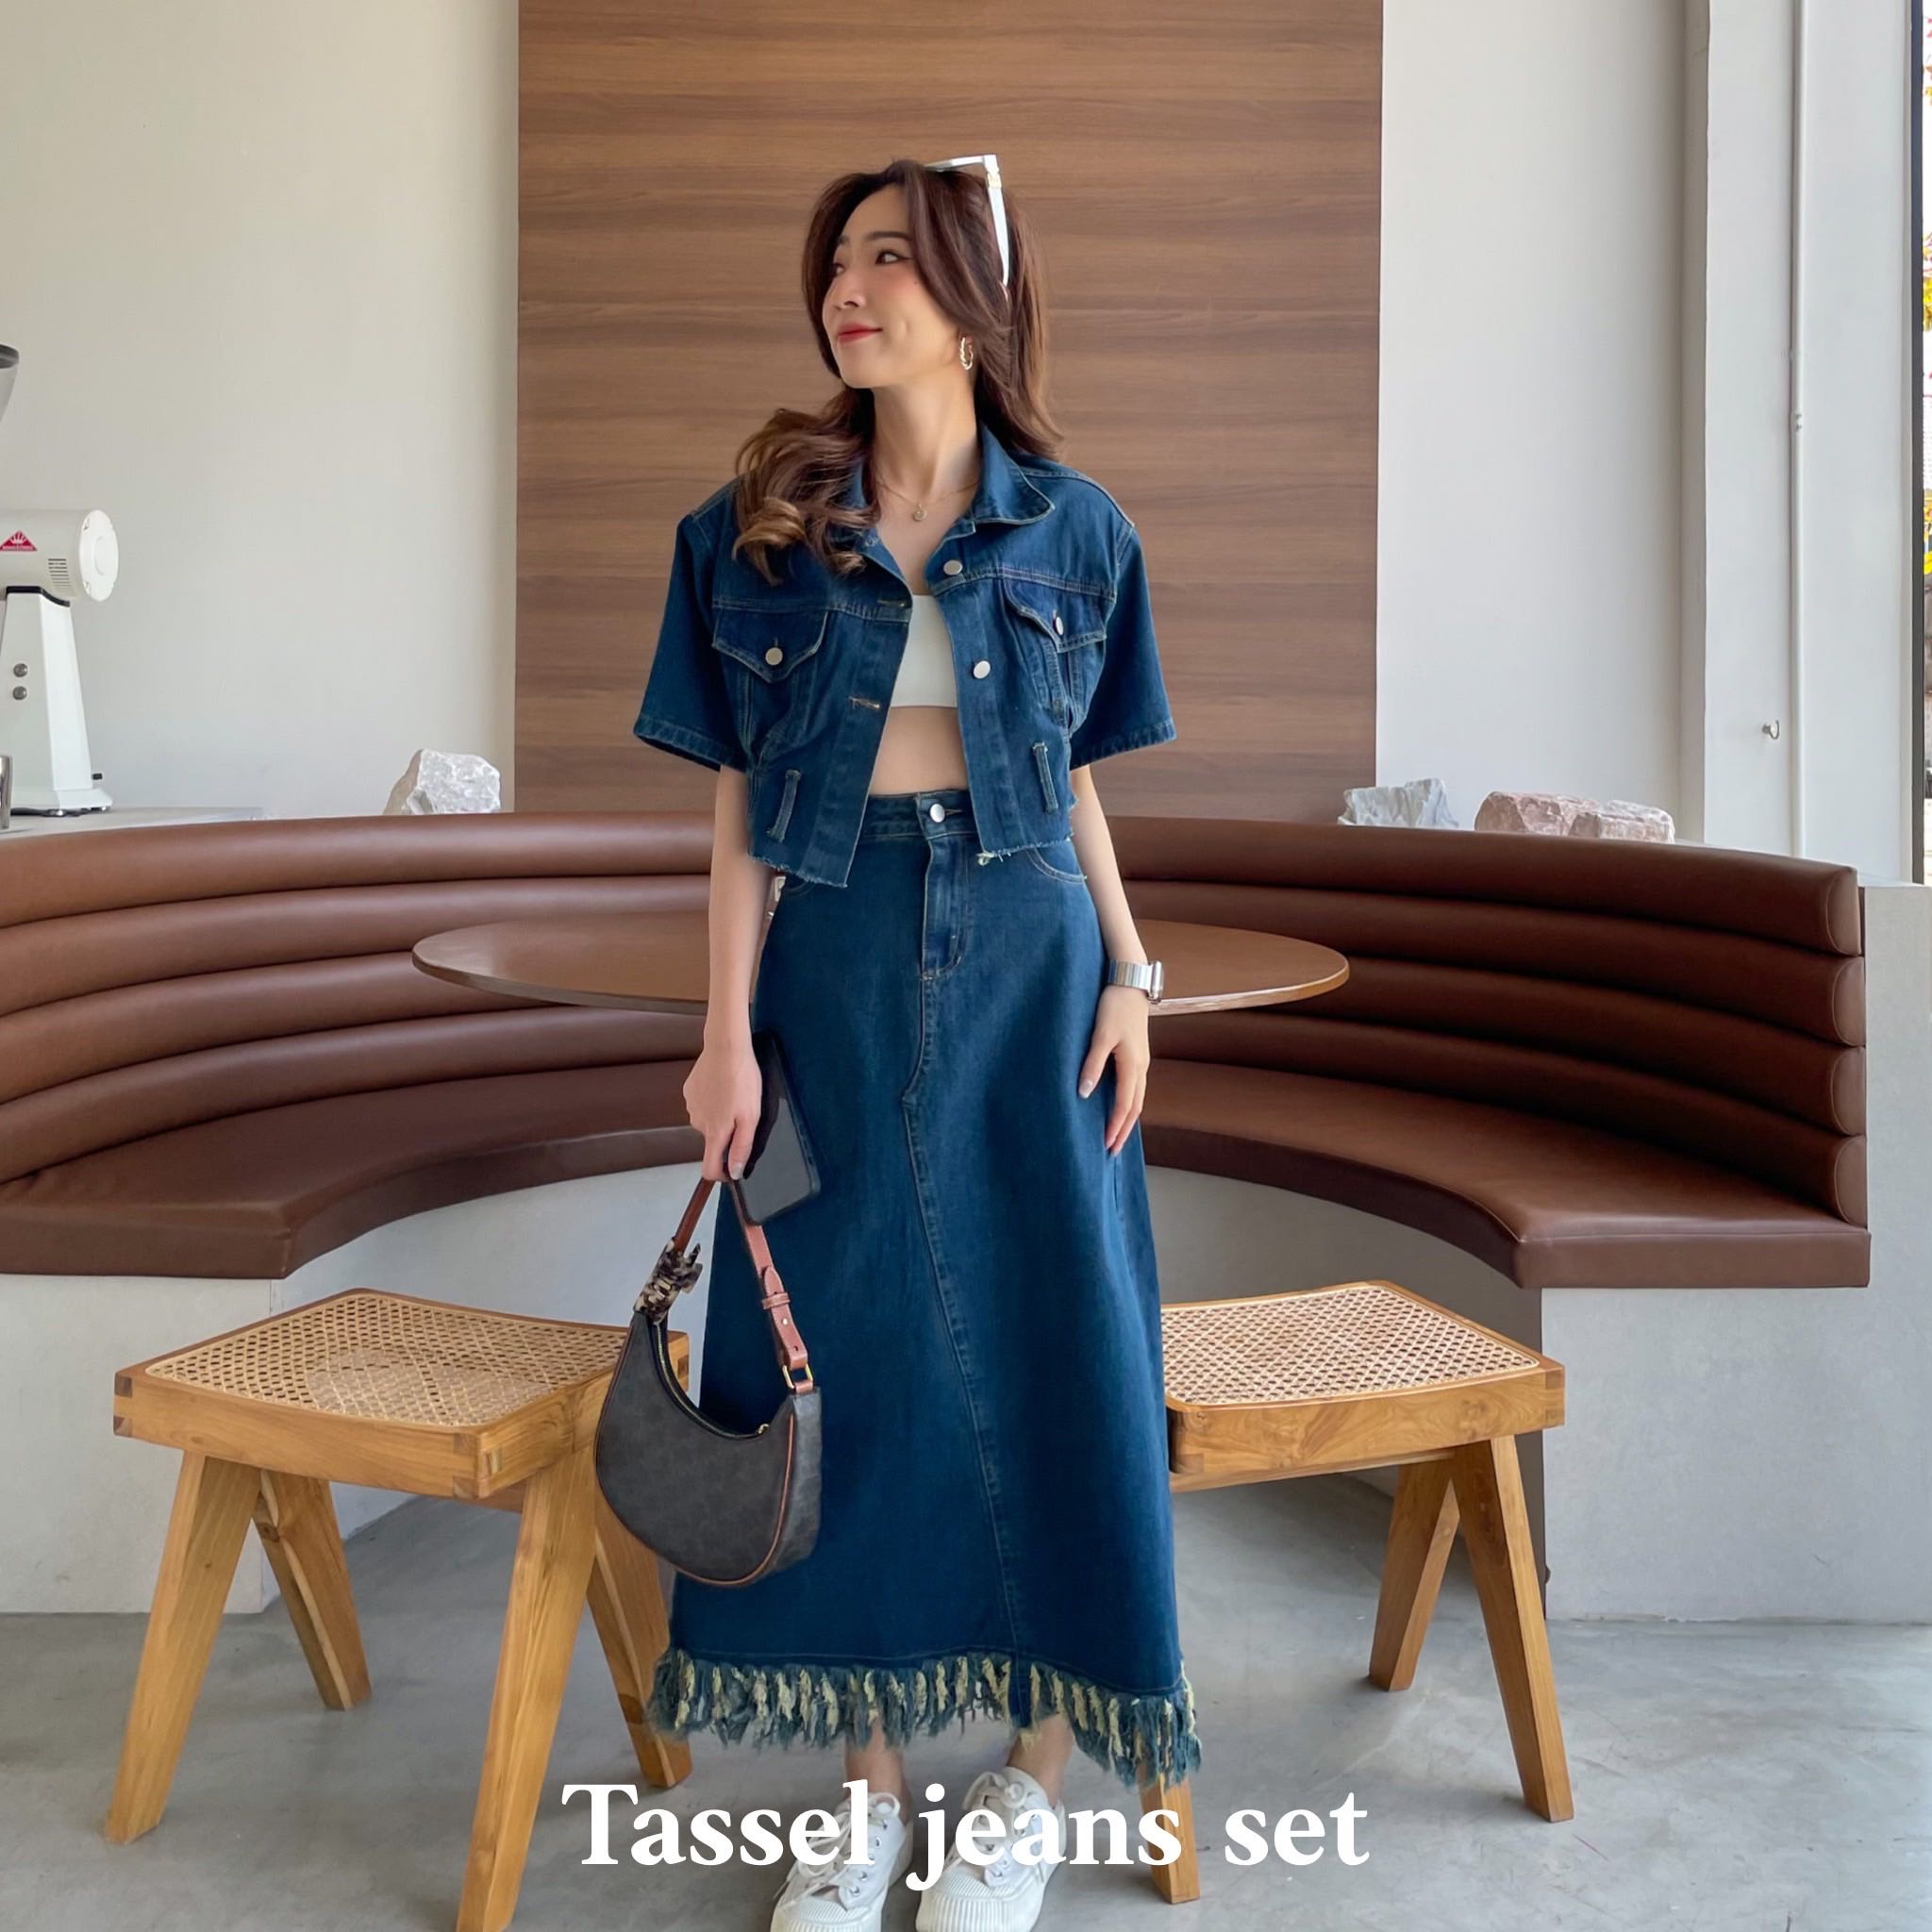 Tassel jeans set - เซ็ตยีนส์แต่งชายกระโปรง | LINE SHOPPING